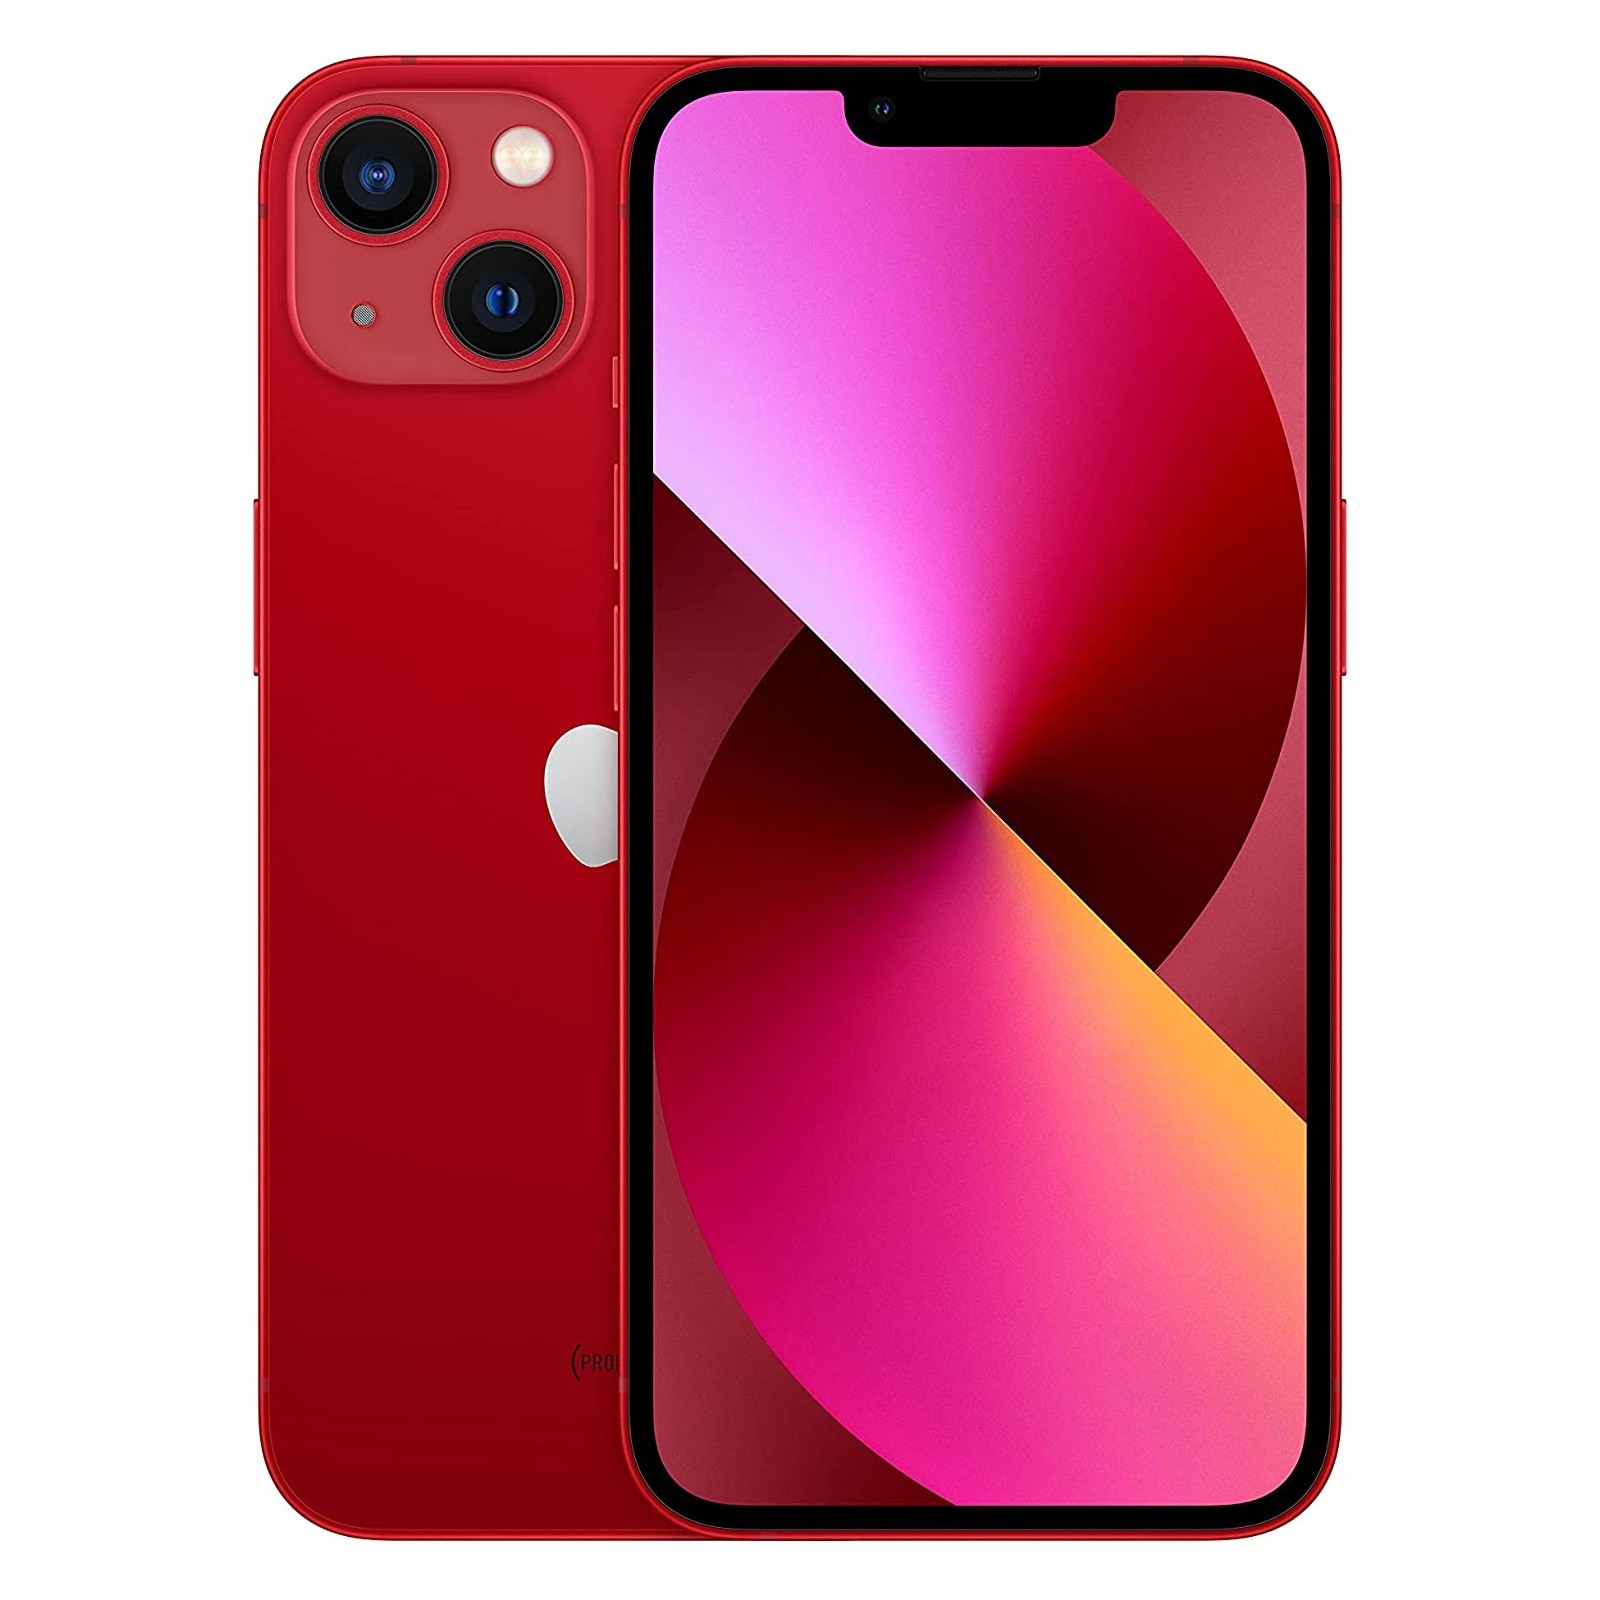 Apple iphone 13 red 256gb